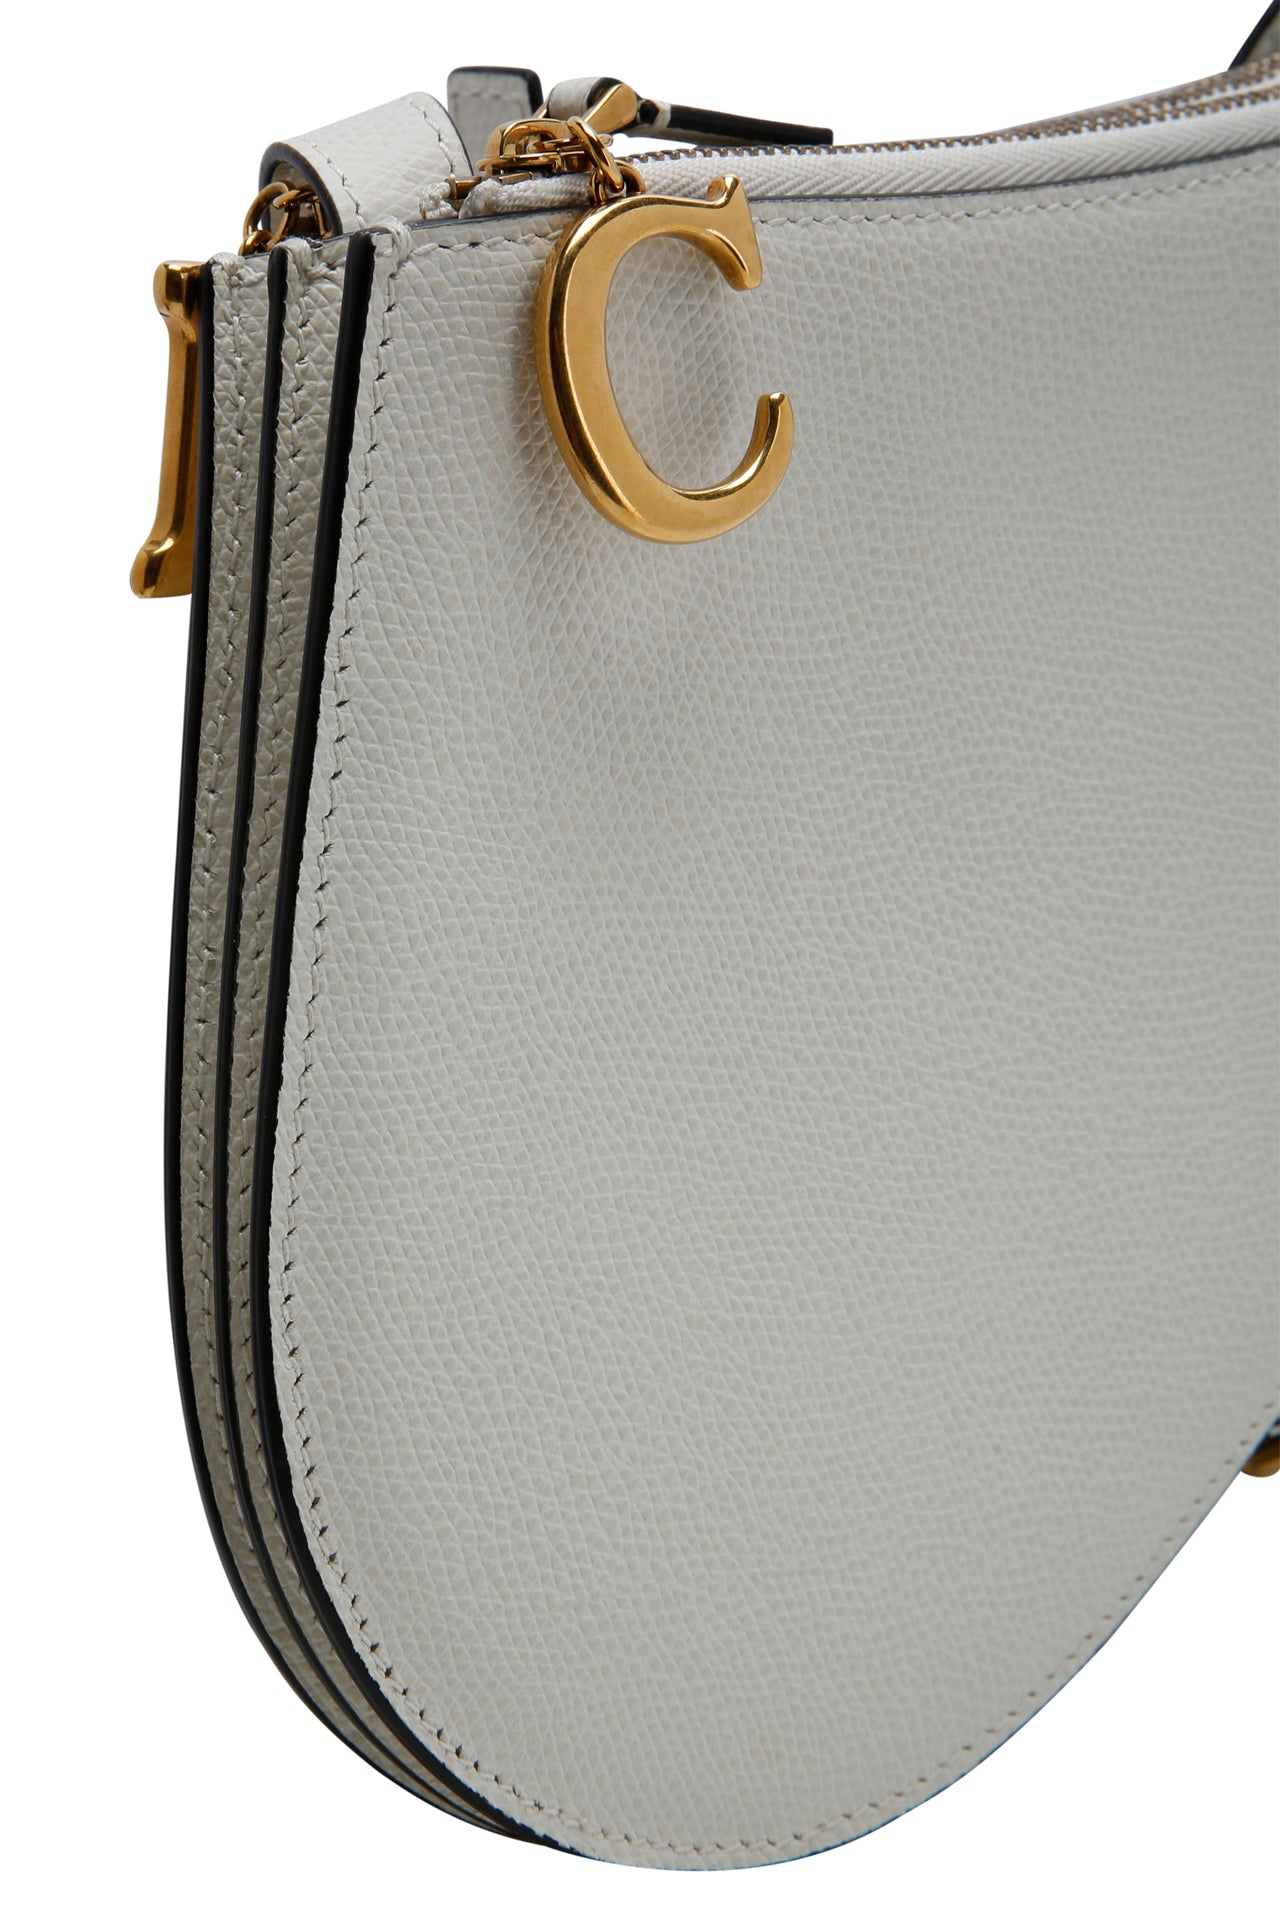 Dior Ivory Leather Saddle Triple Zip Crossbody Bag